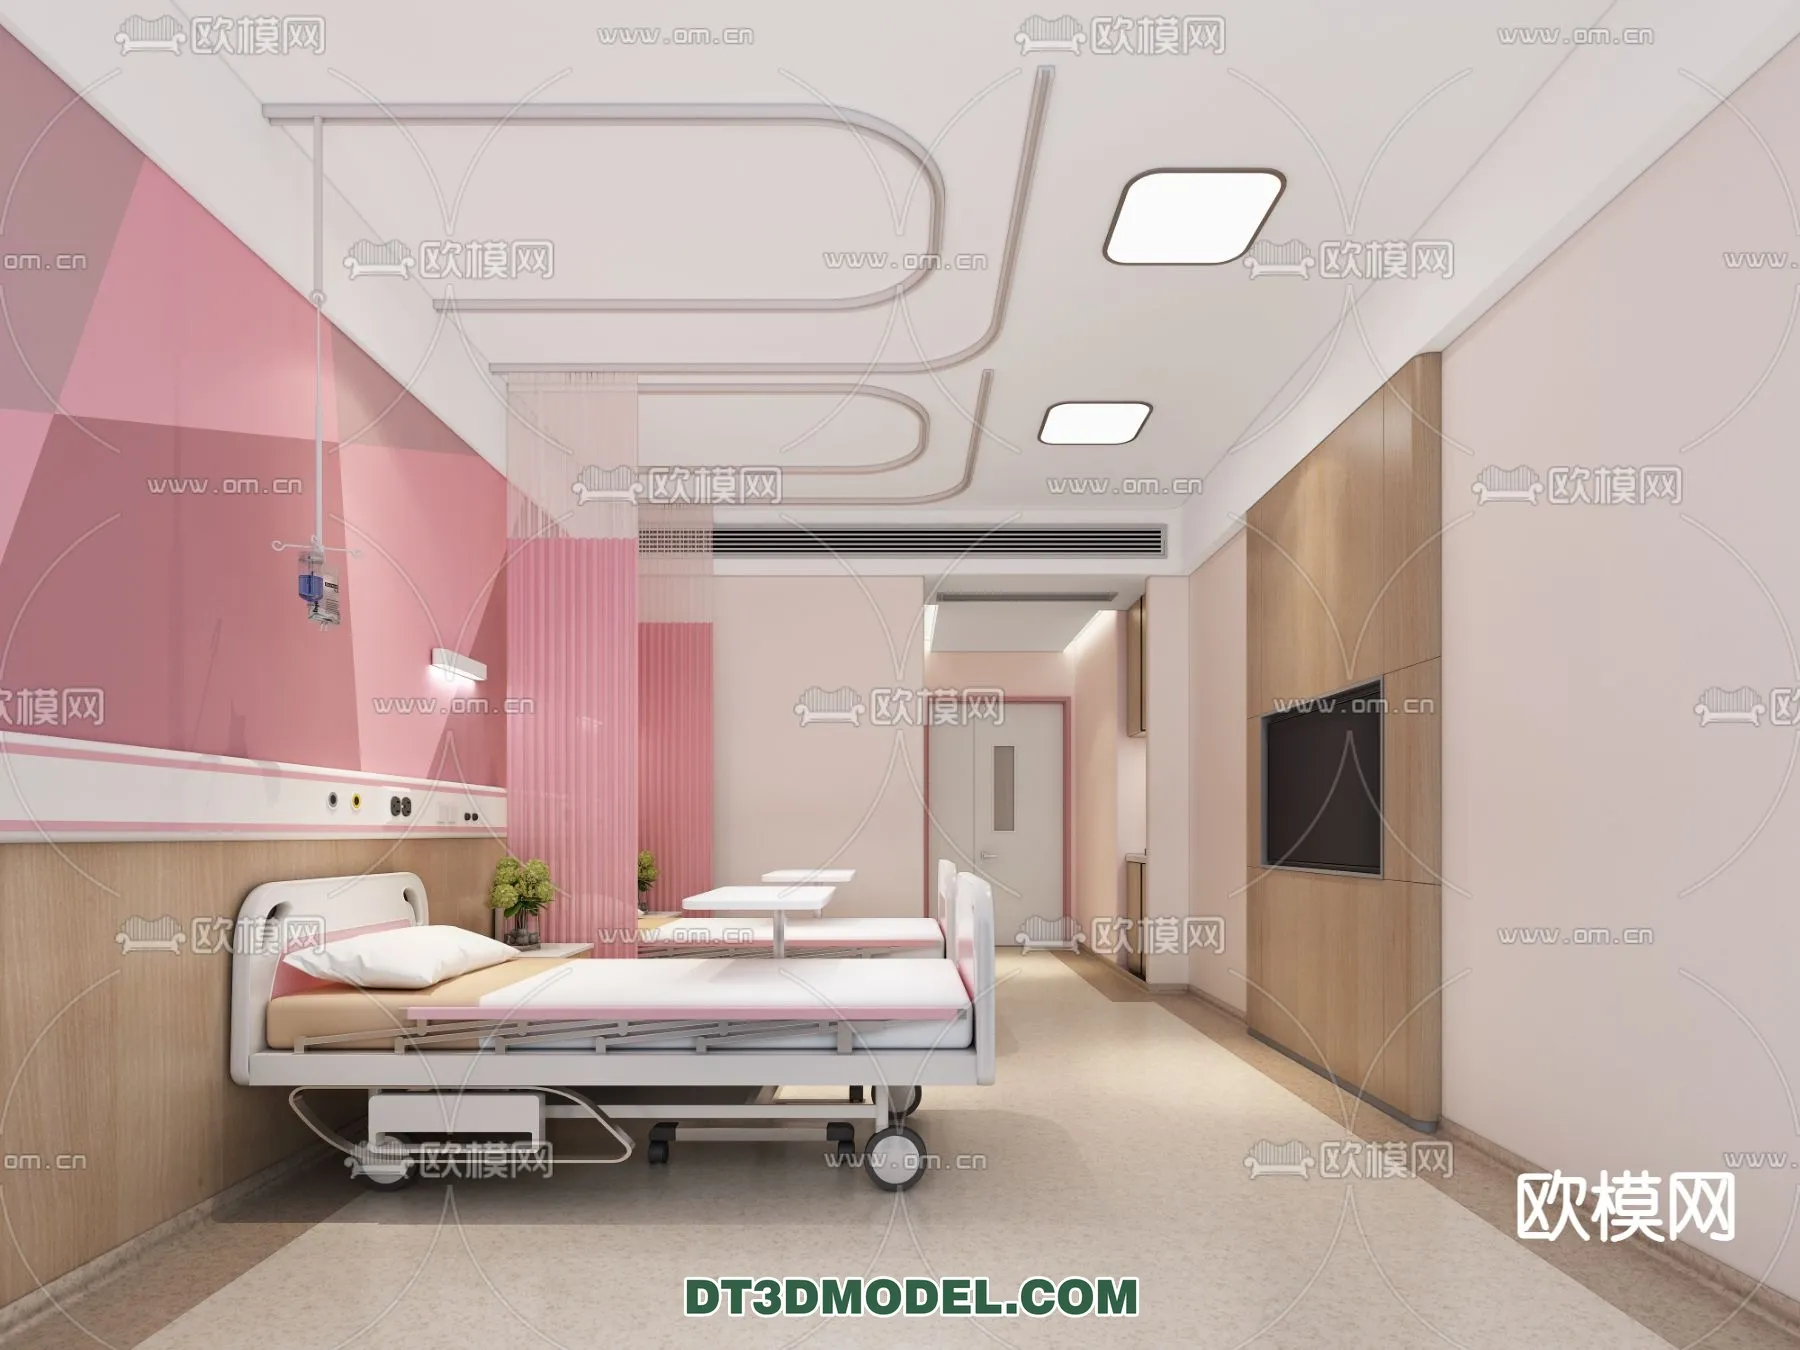 HOSPITAL 3D SCENES – MODERN – 0062